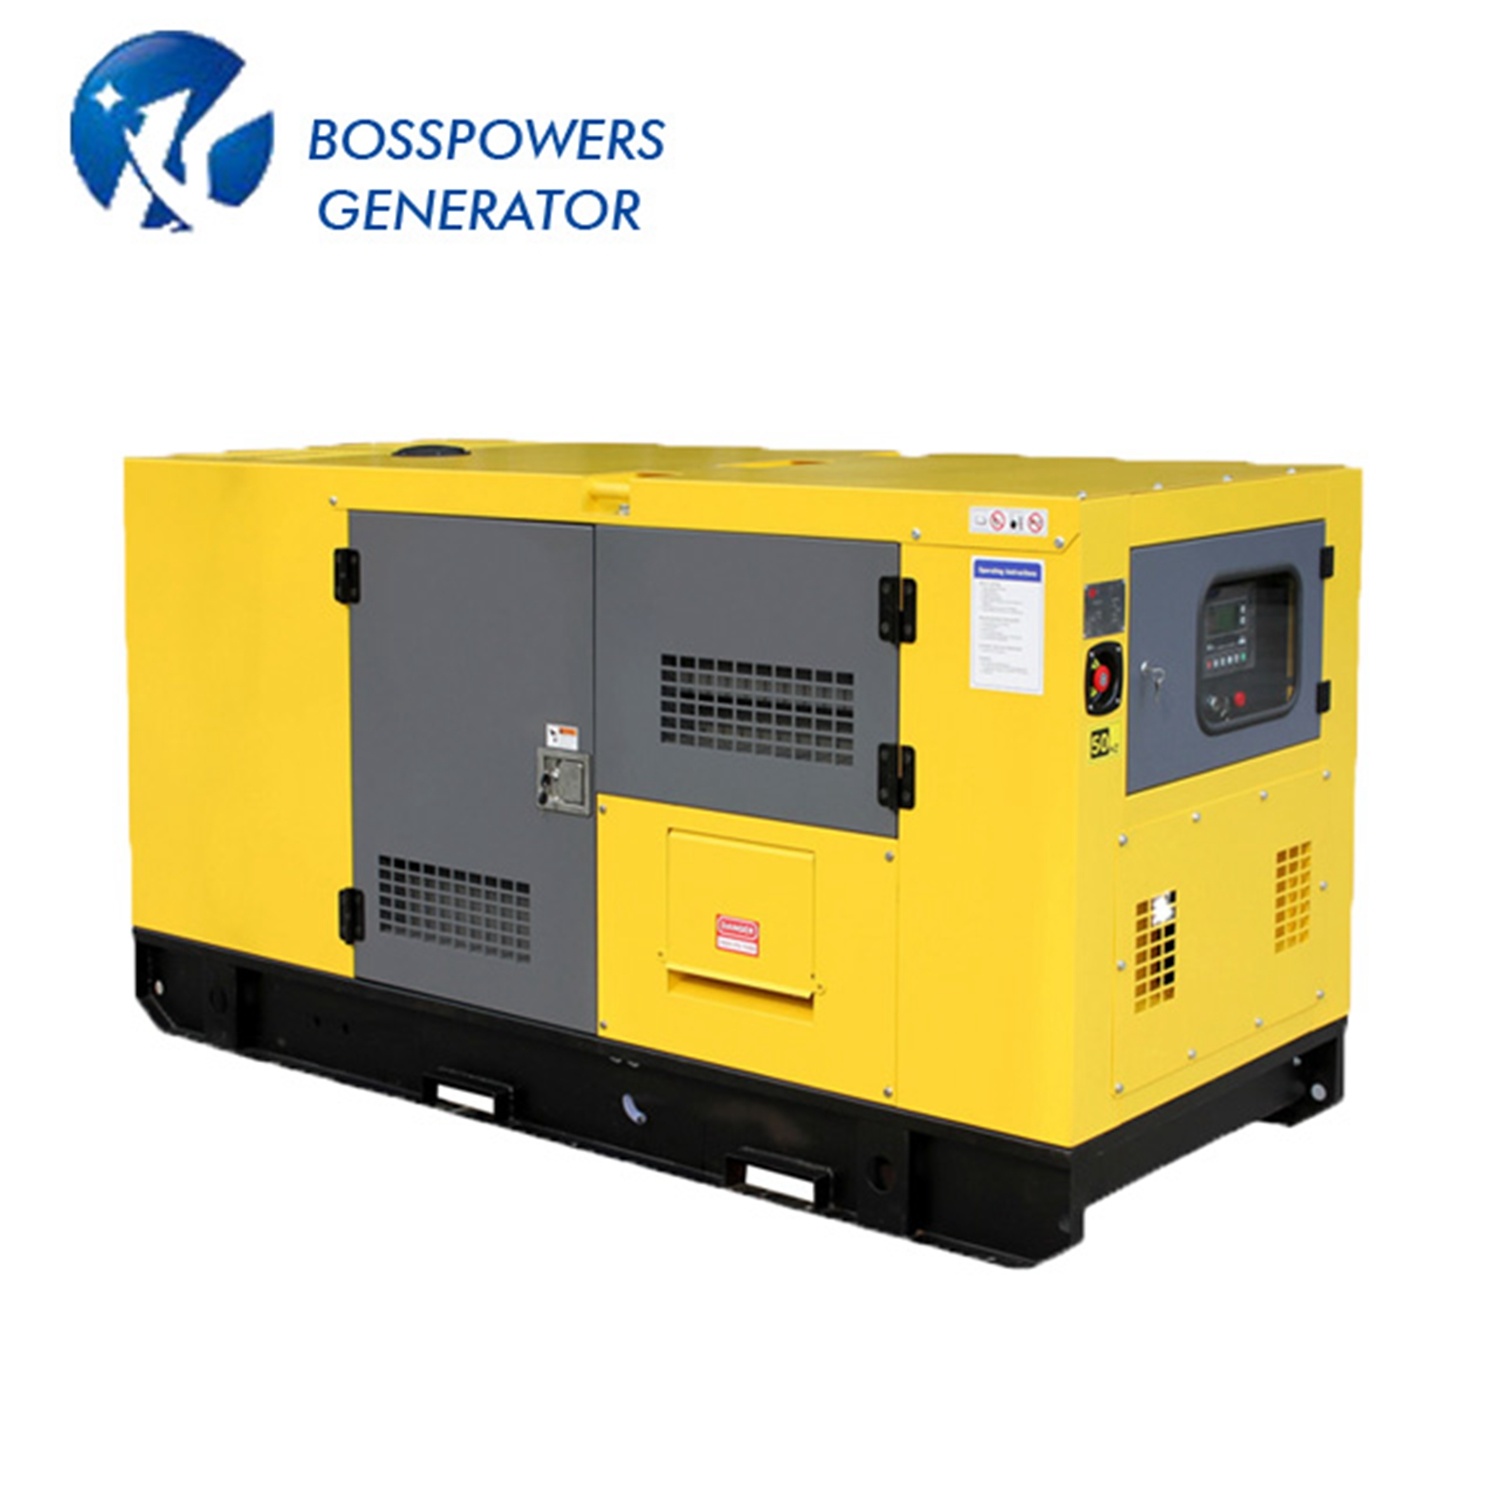 100kVA Diesel Generator Industrical Backup Powered by R6105azd